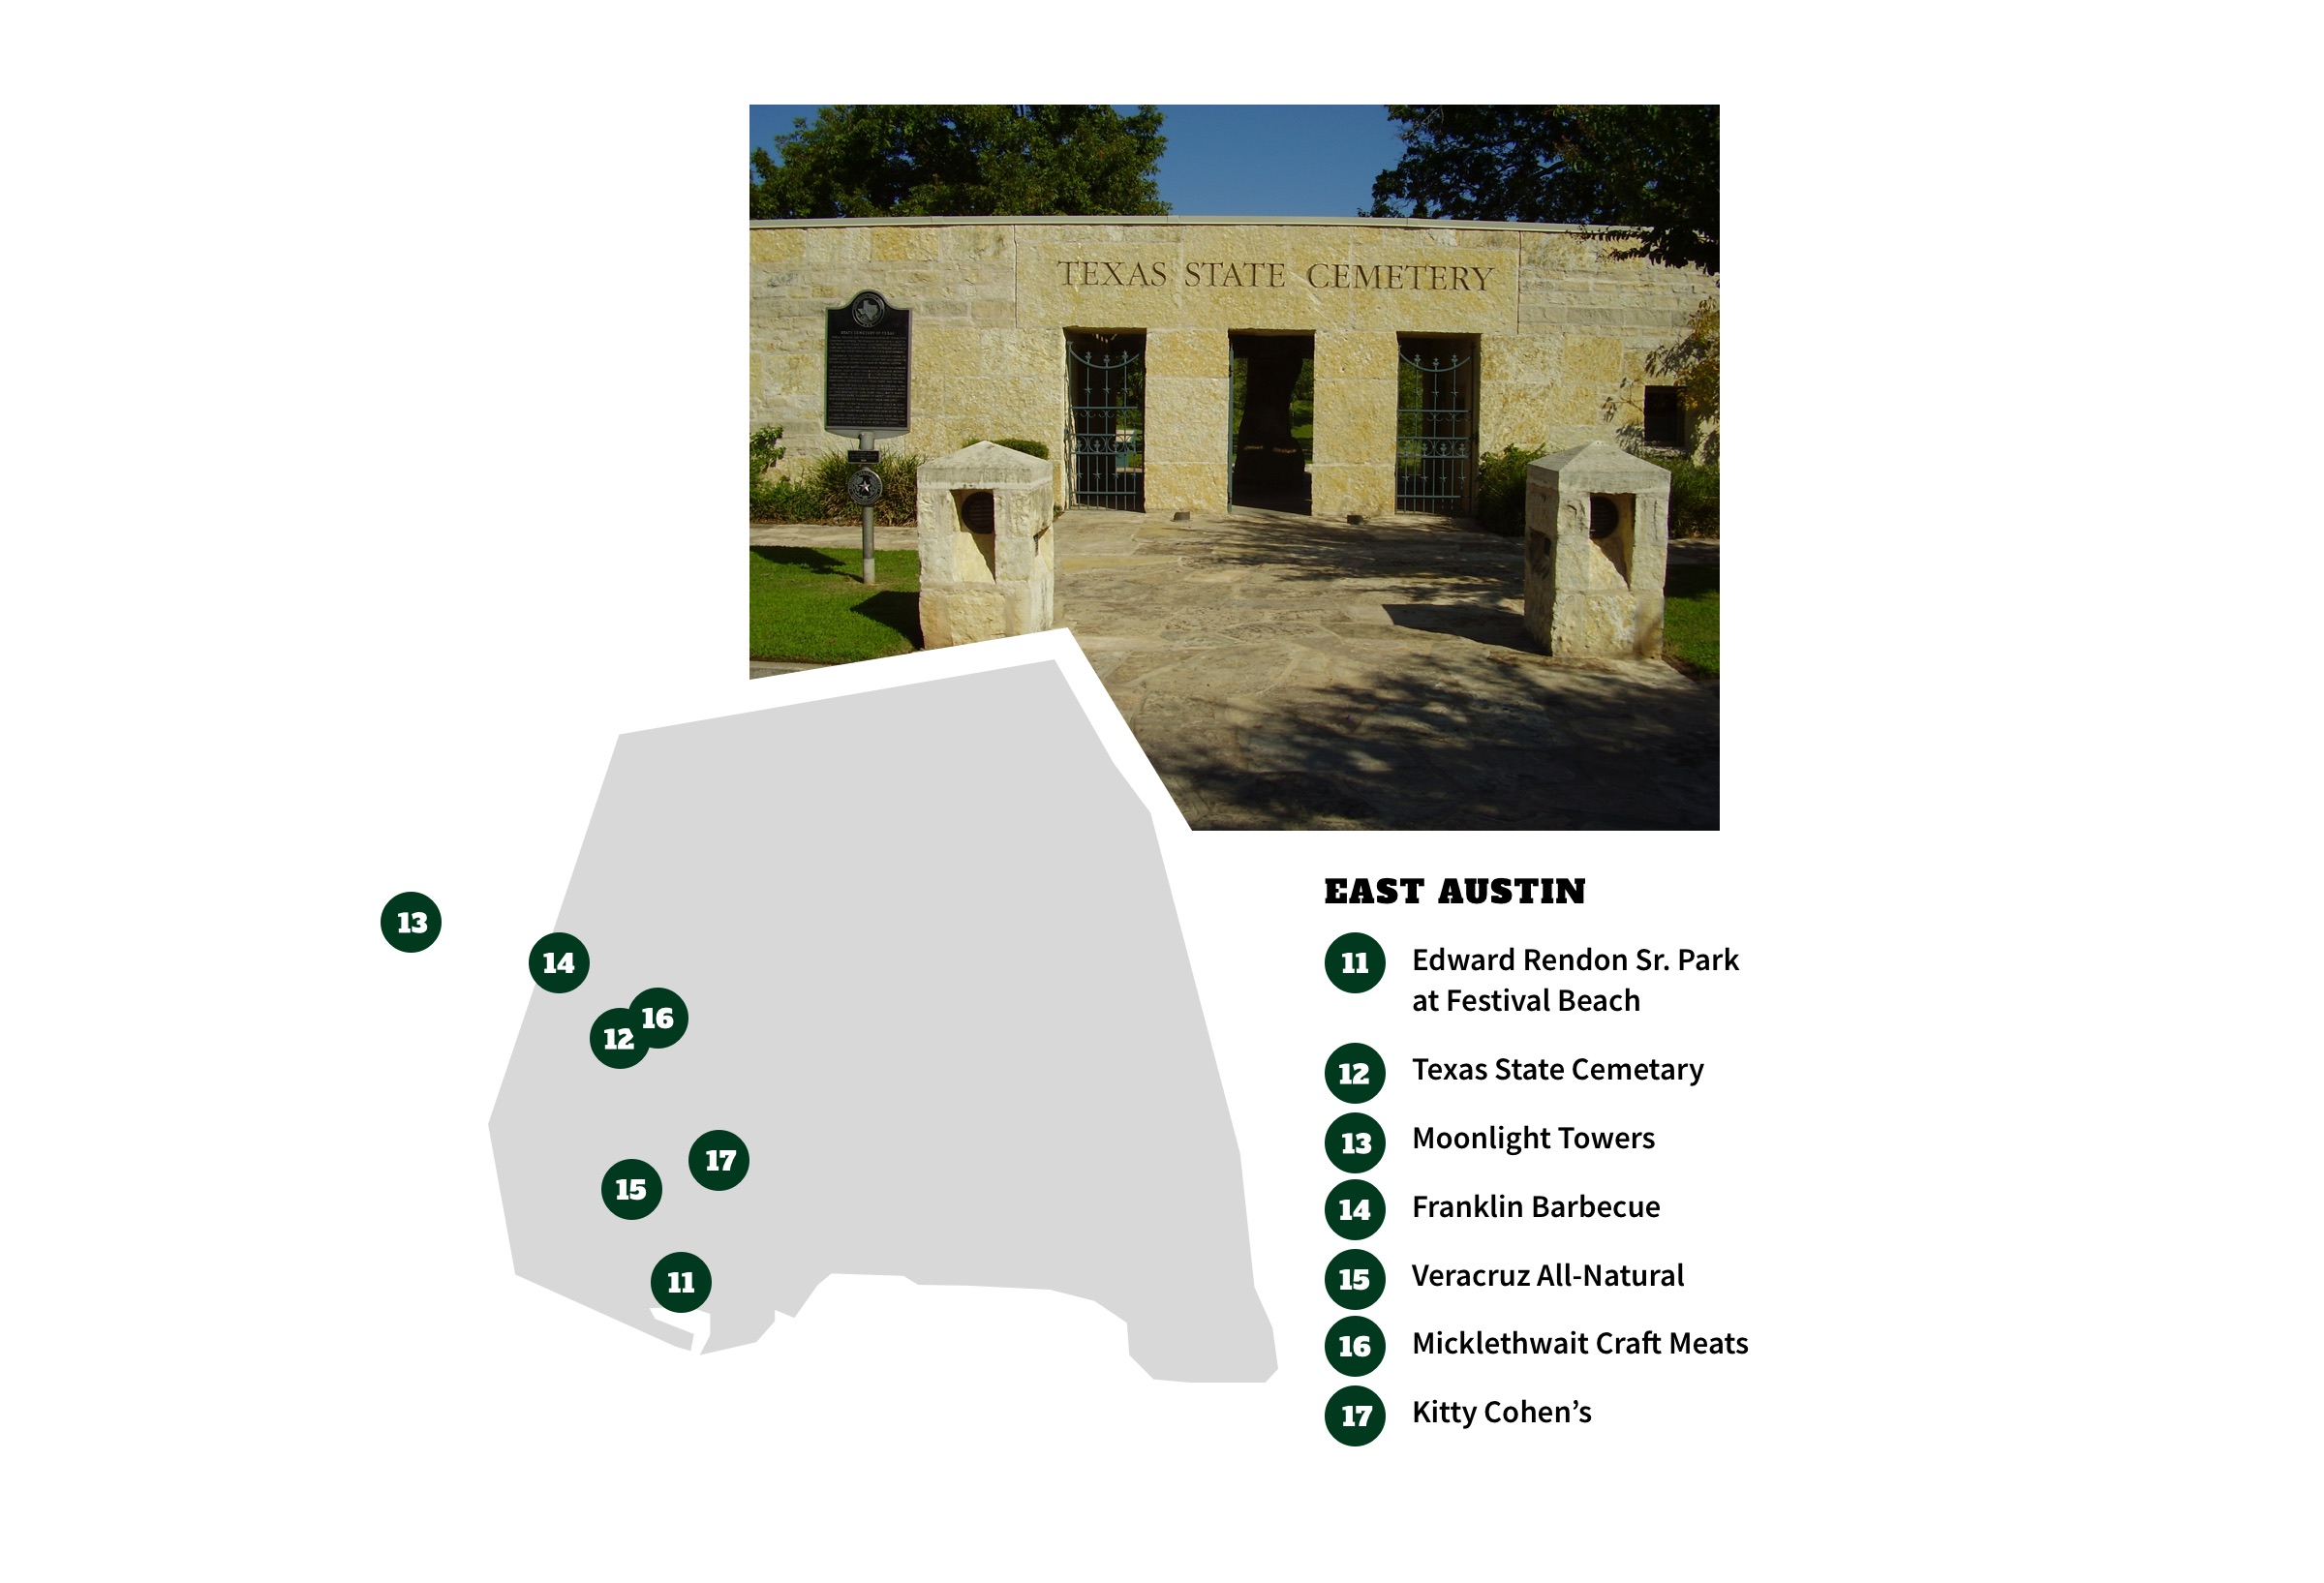 Map of East Austin